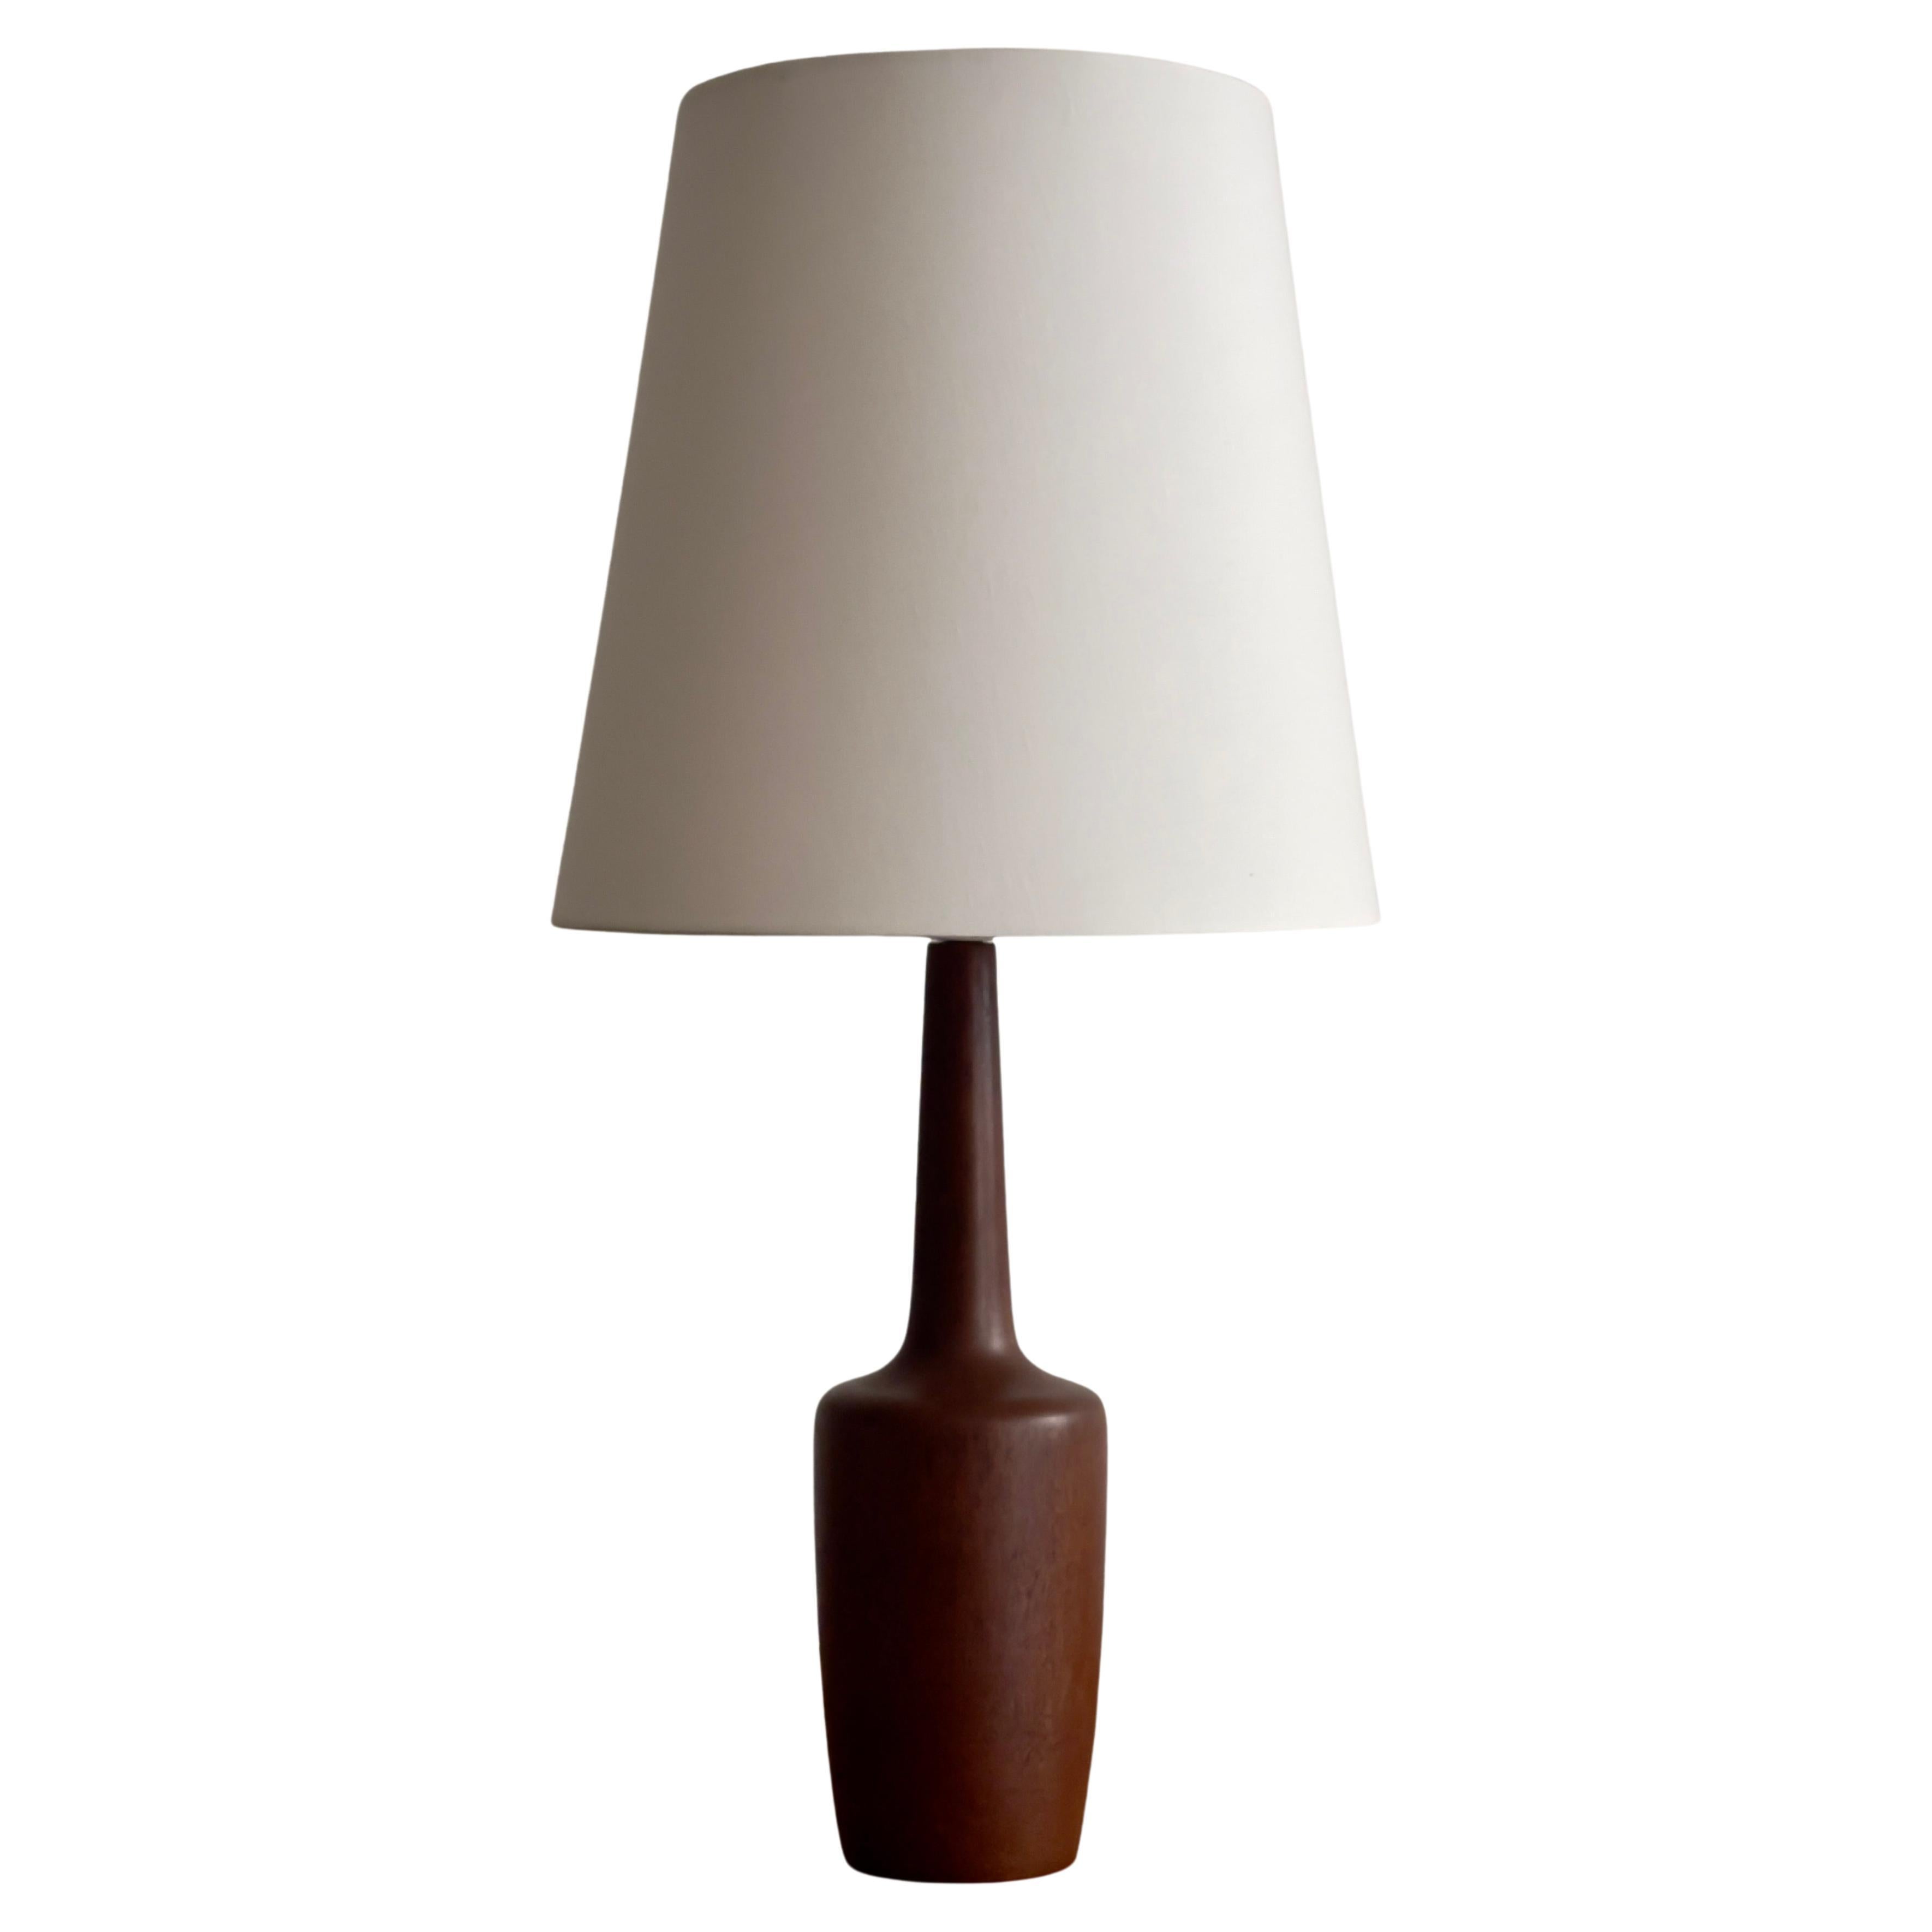 Elegant 1940s danish modern table lamp in high quality solid teak wood. For Sale